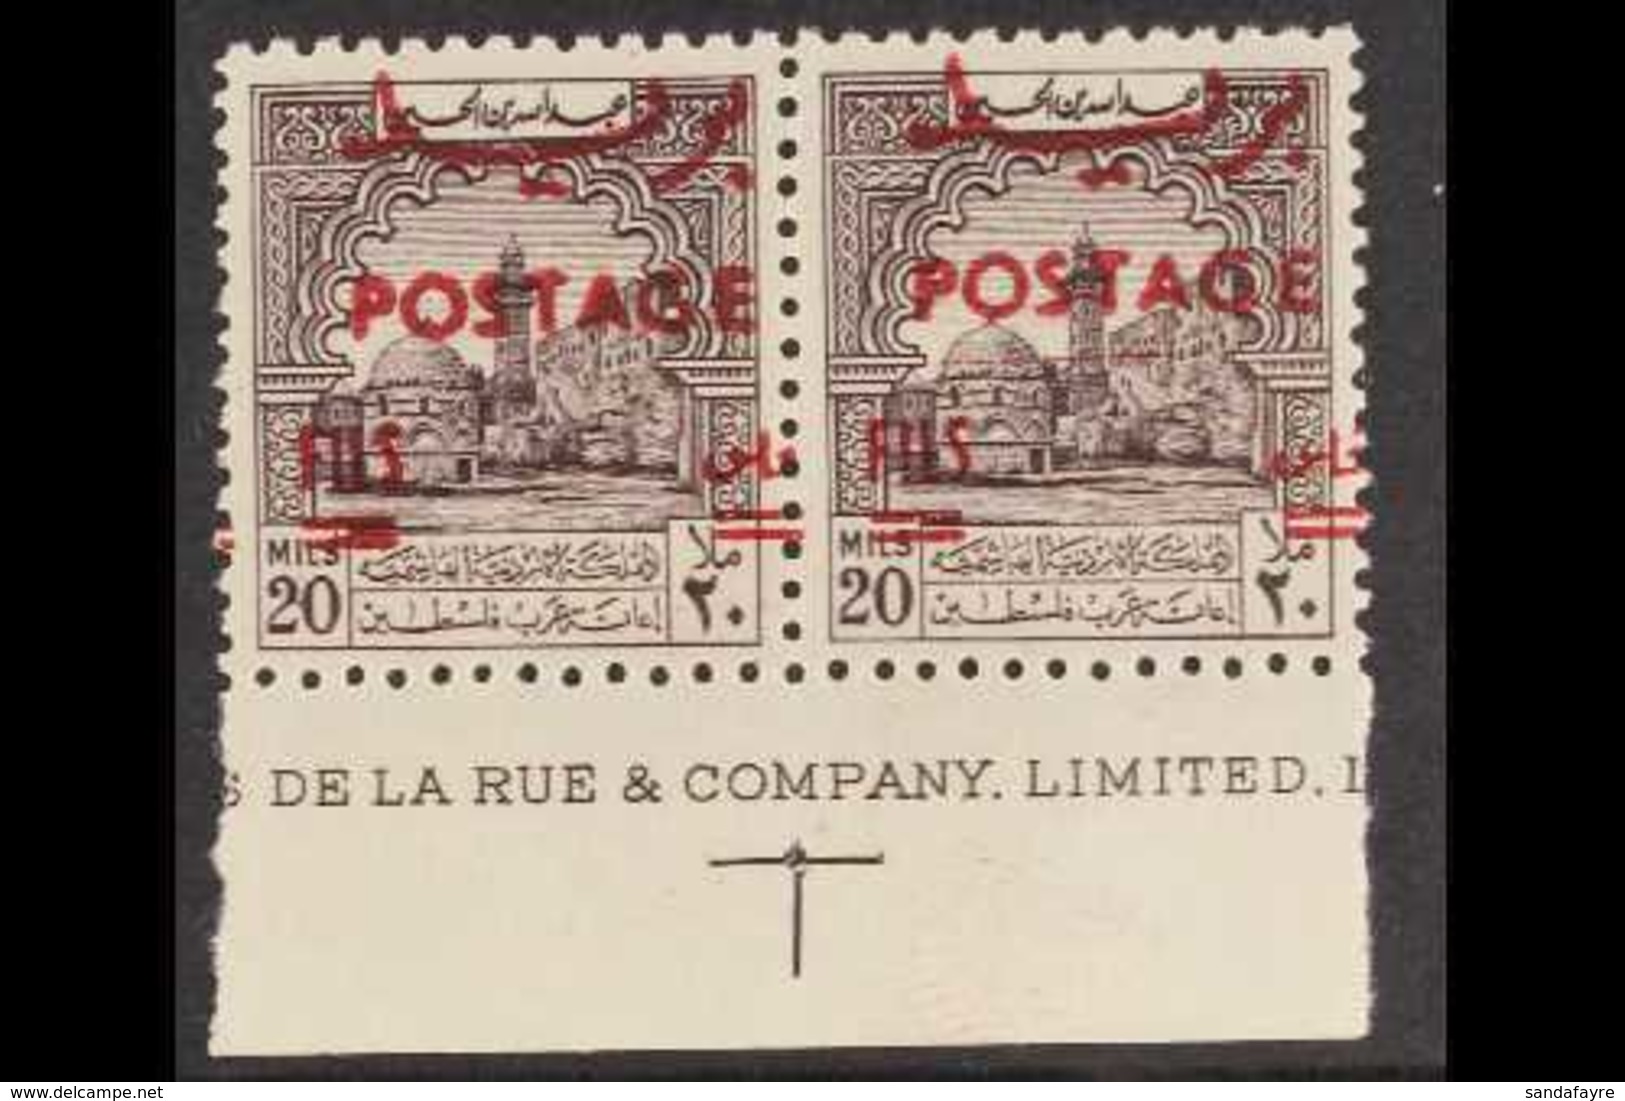 1953-56 20f On 20m Purple-brown "POSTAGE" Overprint, SG 406, Superb Never Hinged Mint Lower Marginal Horizontal PAIR Wit - Jordanië